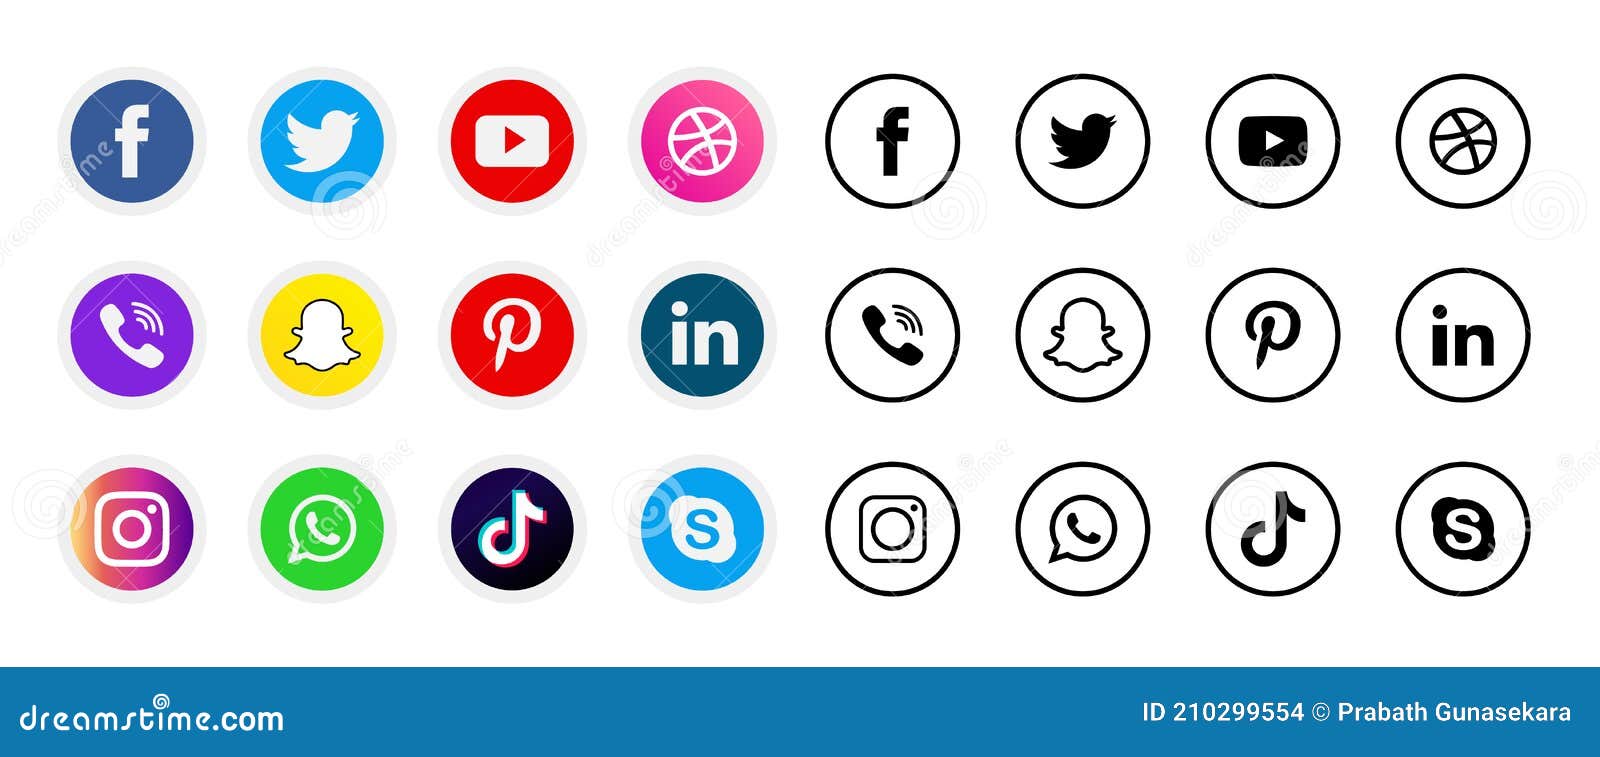 Colorful Black White Shading Social Media Icons Set Of Facebook Twitter Instagram Pinterest Whatsapp Editorial Stock Image Illustration Of Pinterest Socialmedia